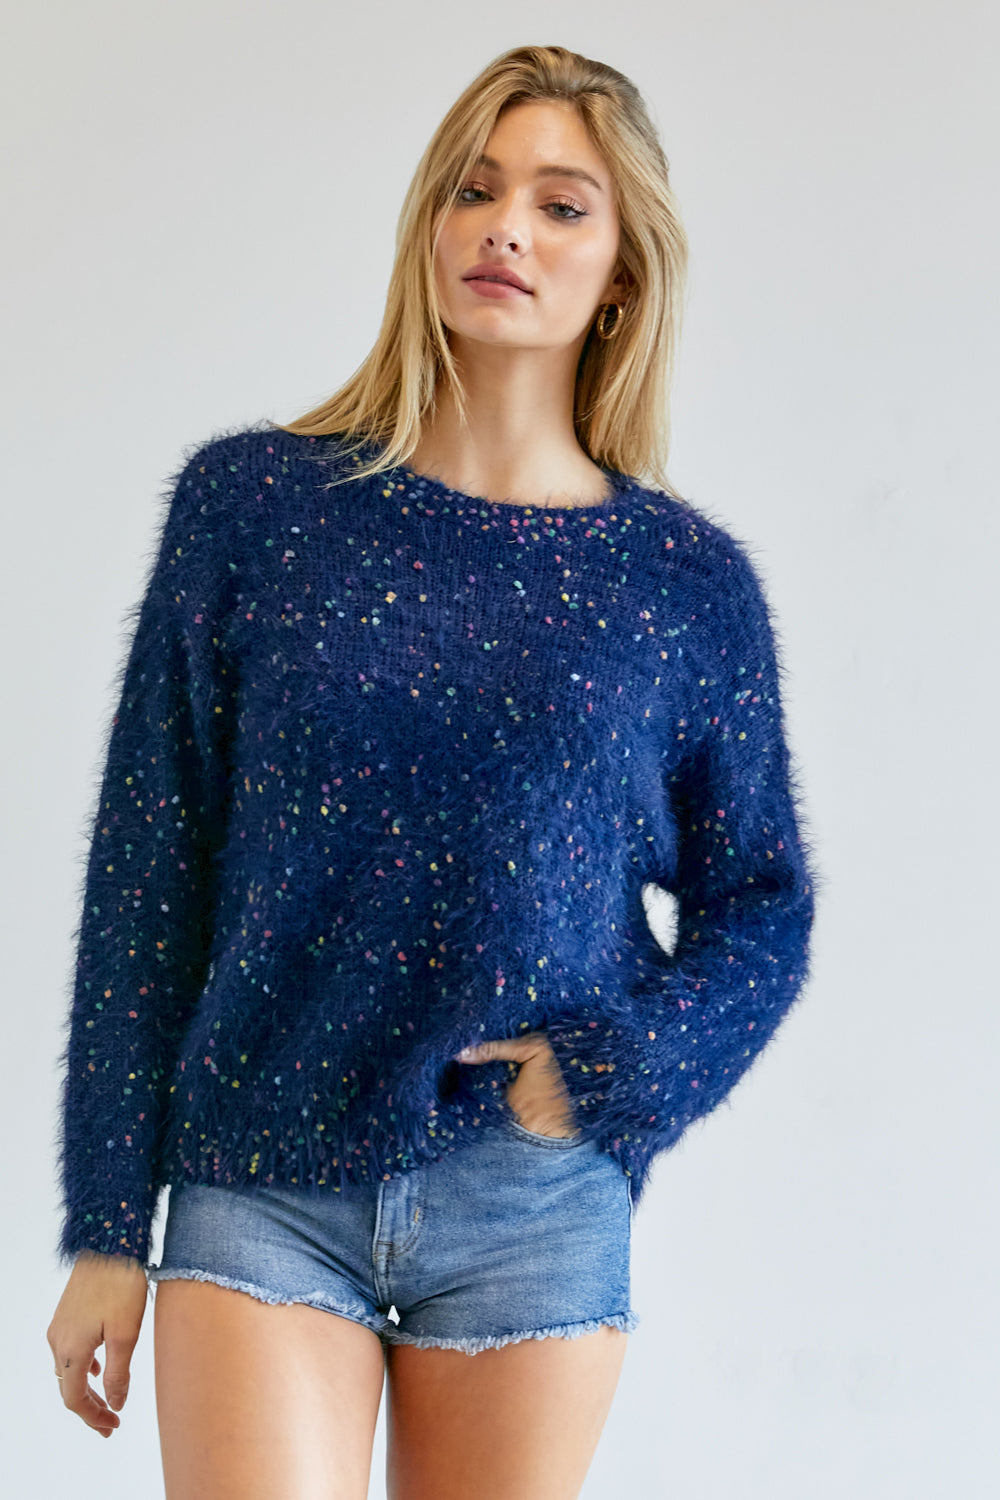 Davi & Dani Multi Color Polka Dot Sweater - Navy Shirts & Tops RYSE Clothing Co. S  